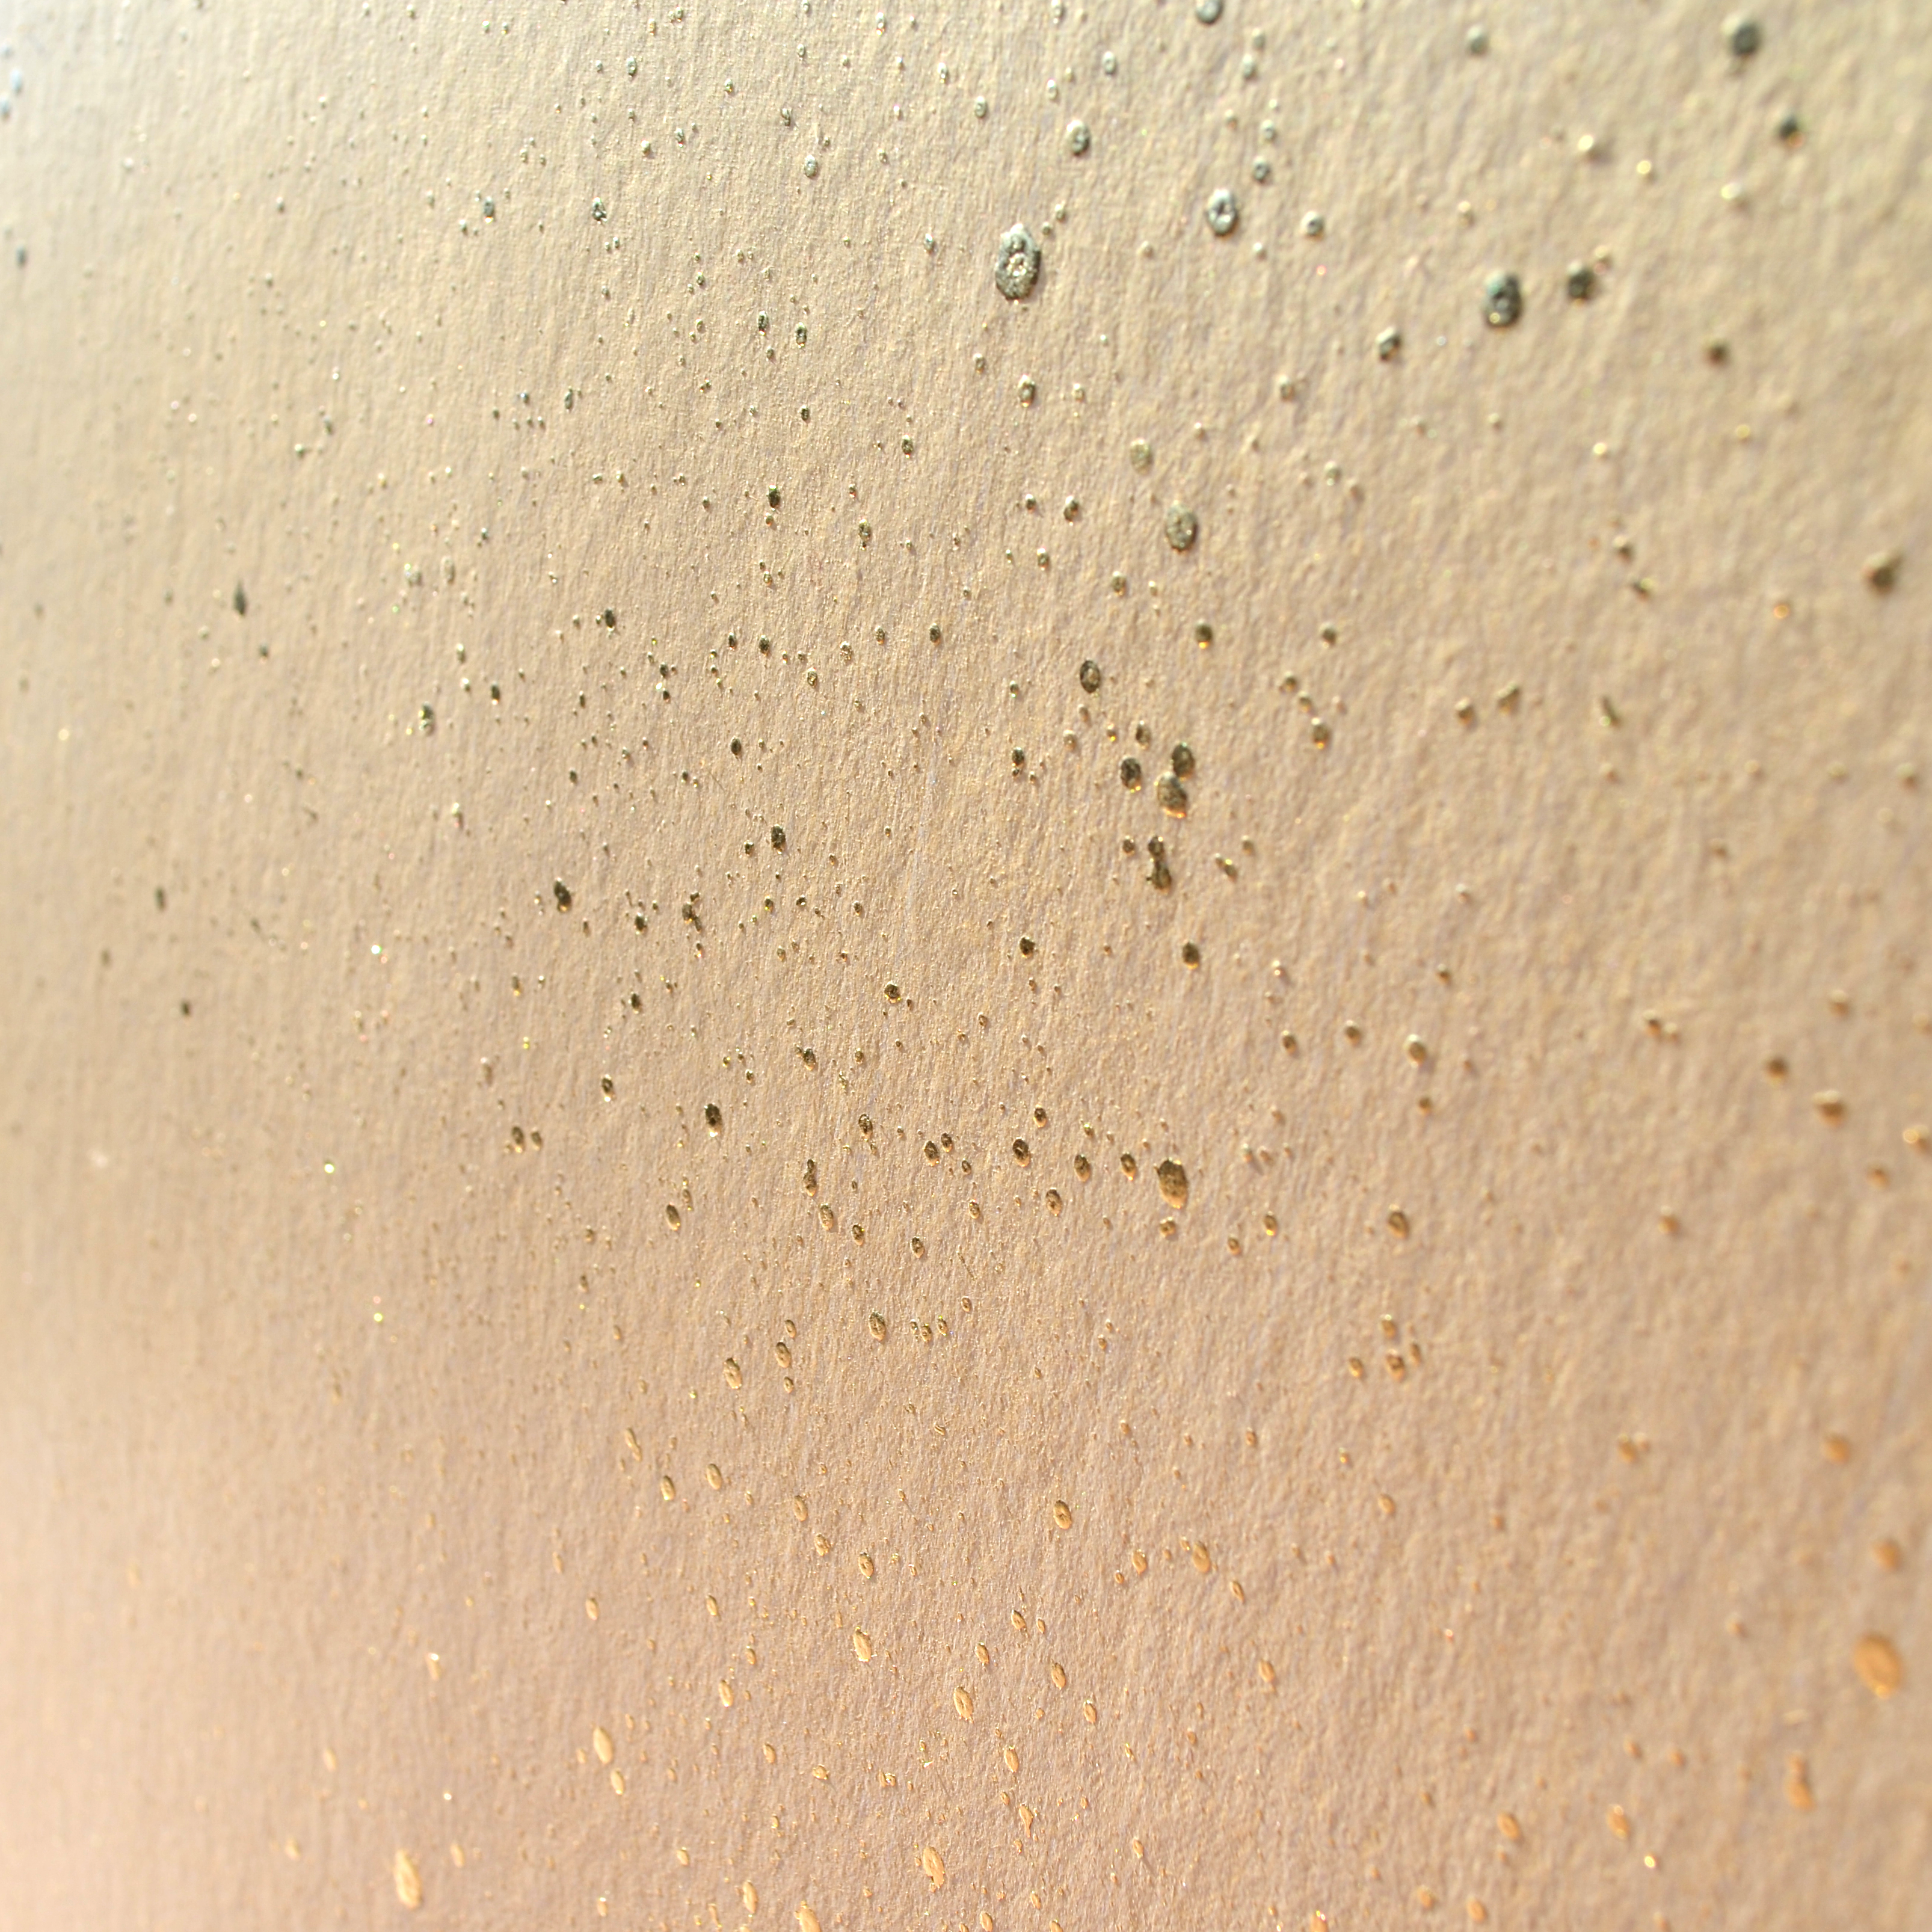 Wide-angle shot of wallpaper in a random splattered pattern in metallic gold on a cream field.